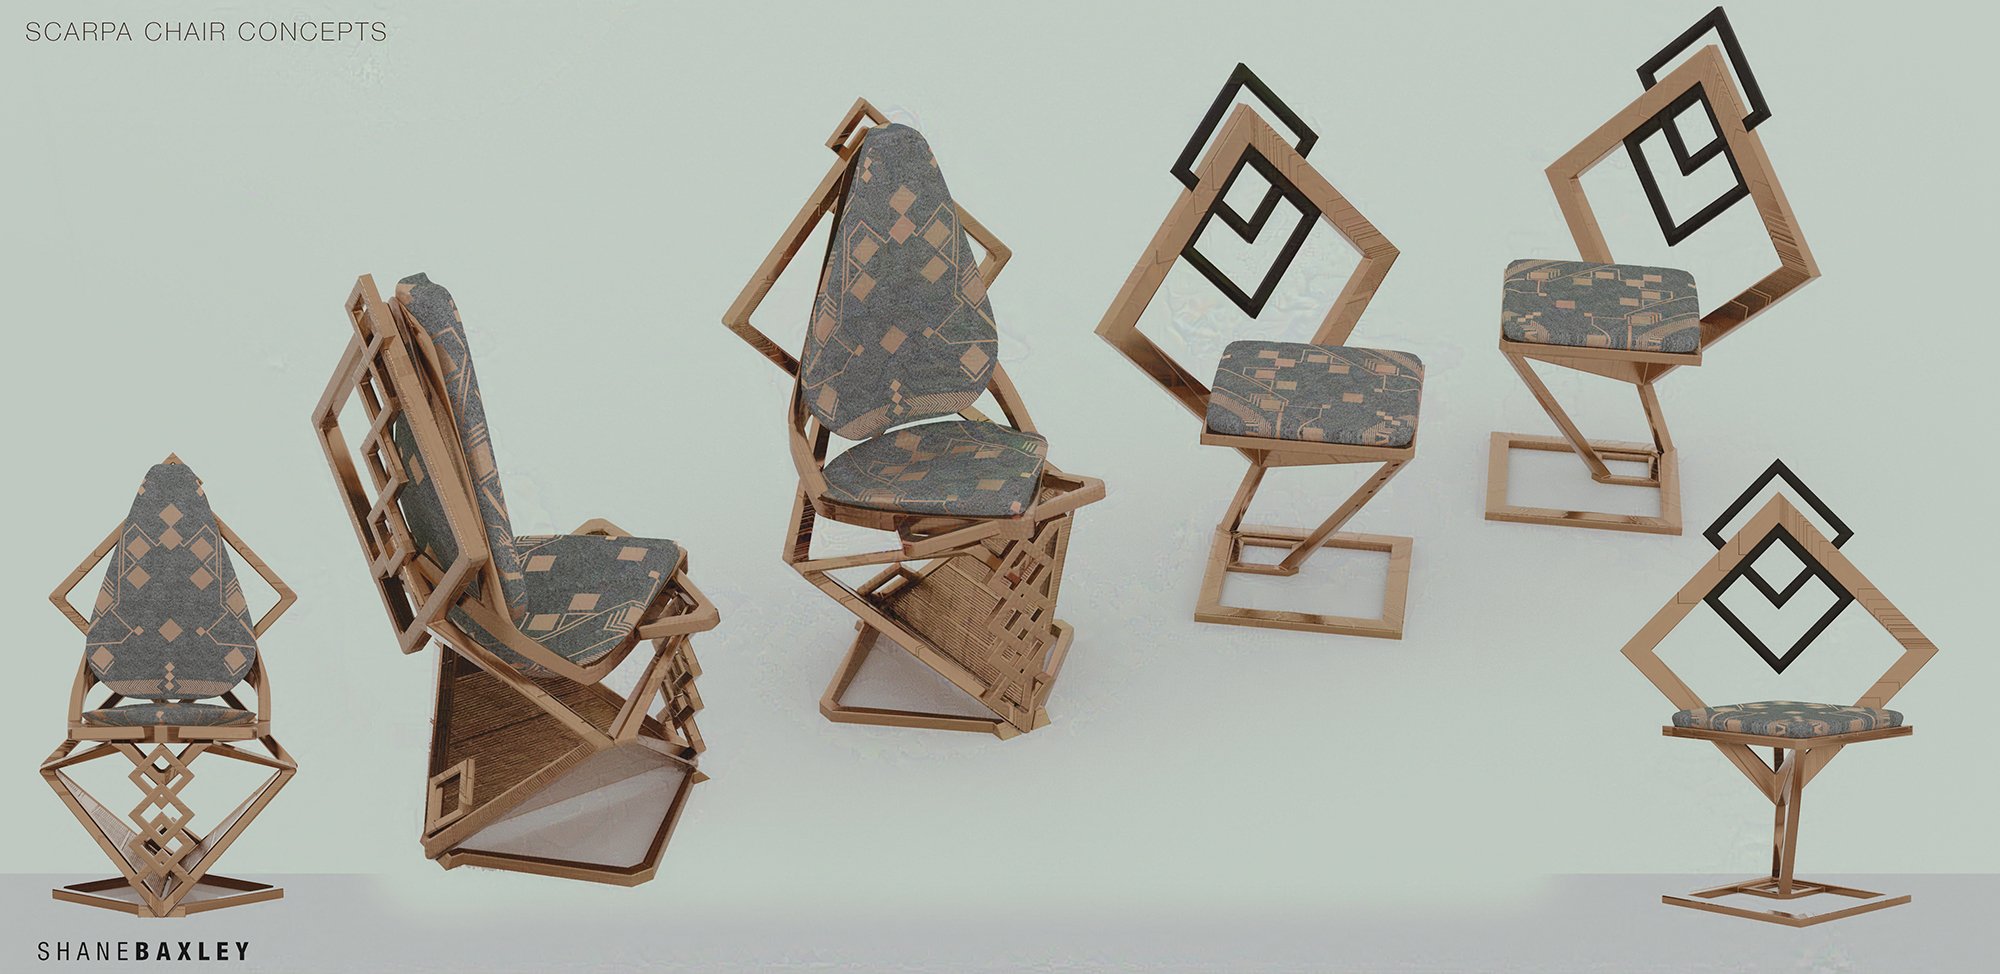 Scarpa Chair Design